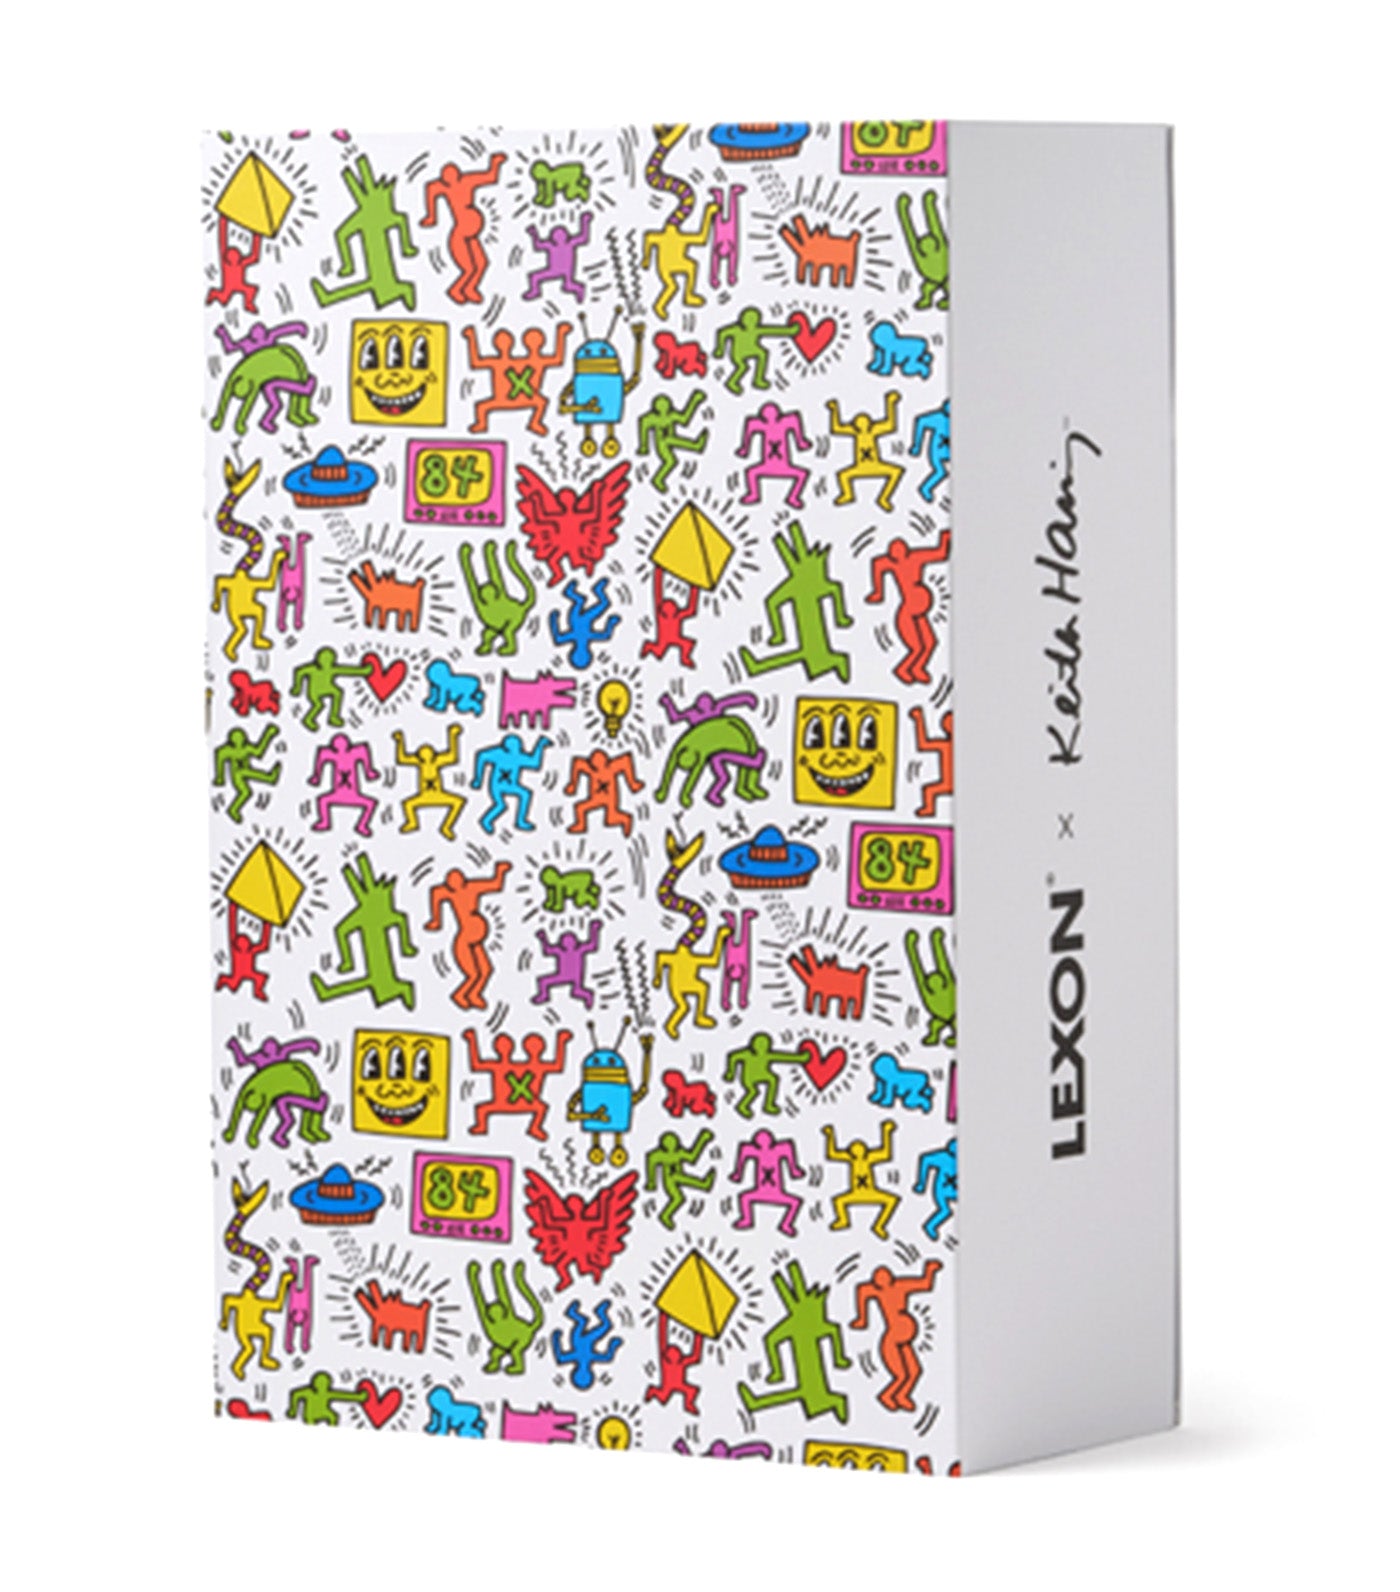 Lexon x Keith Haring Gift Set Happy